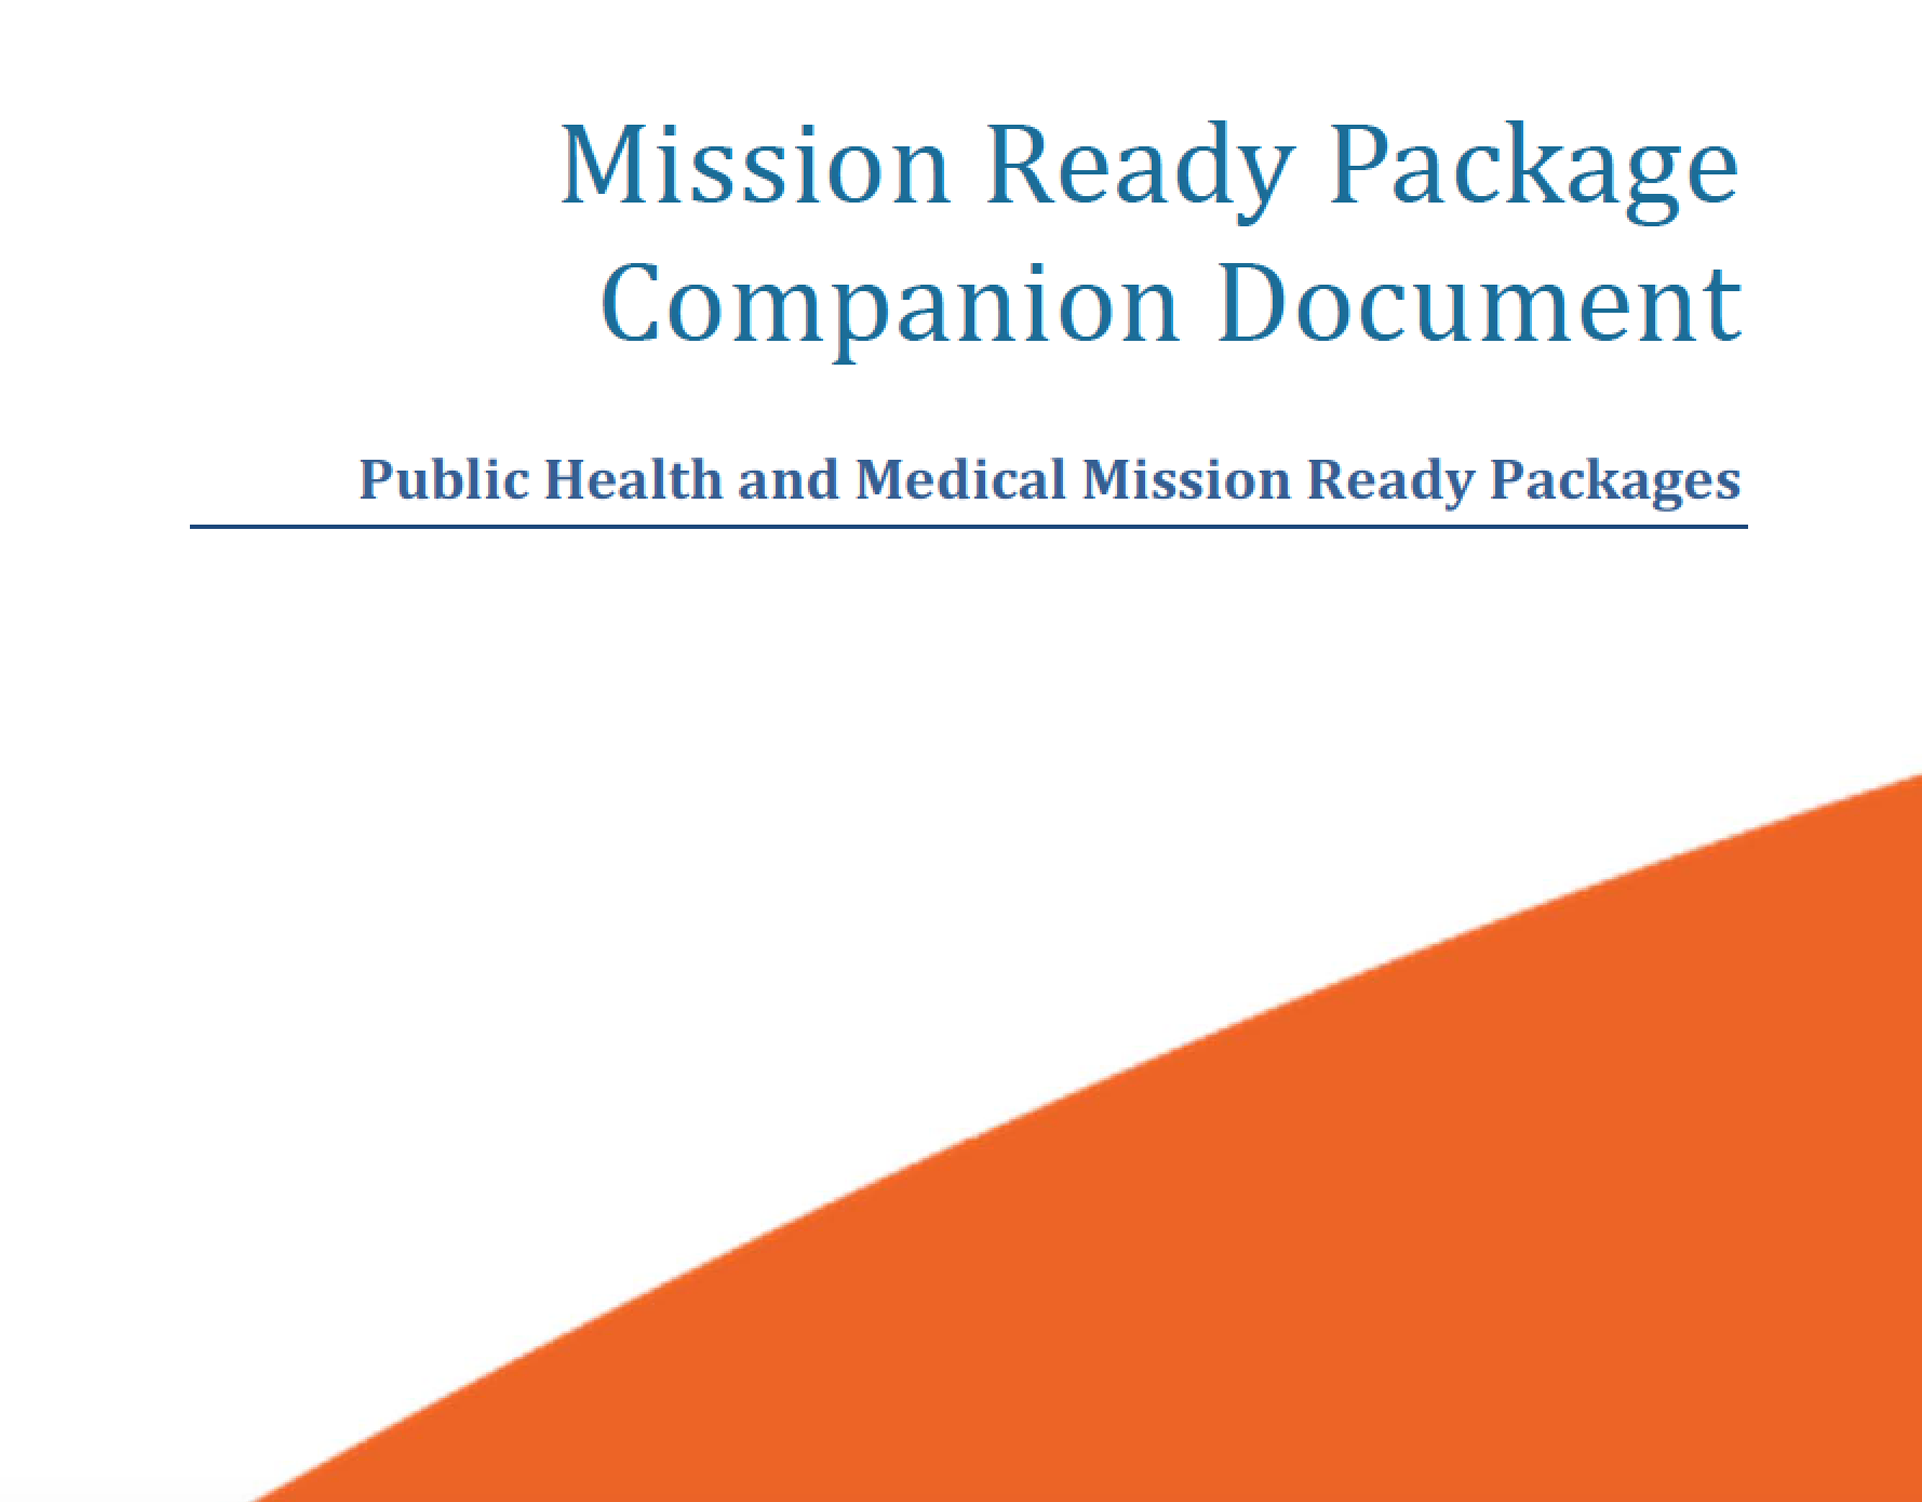 Public Health & Medical MRP Companion Guide